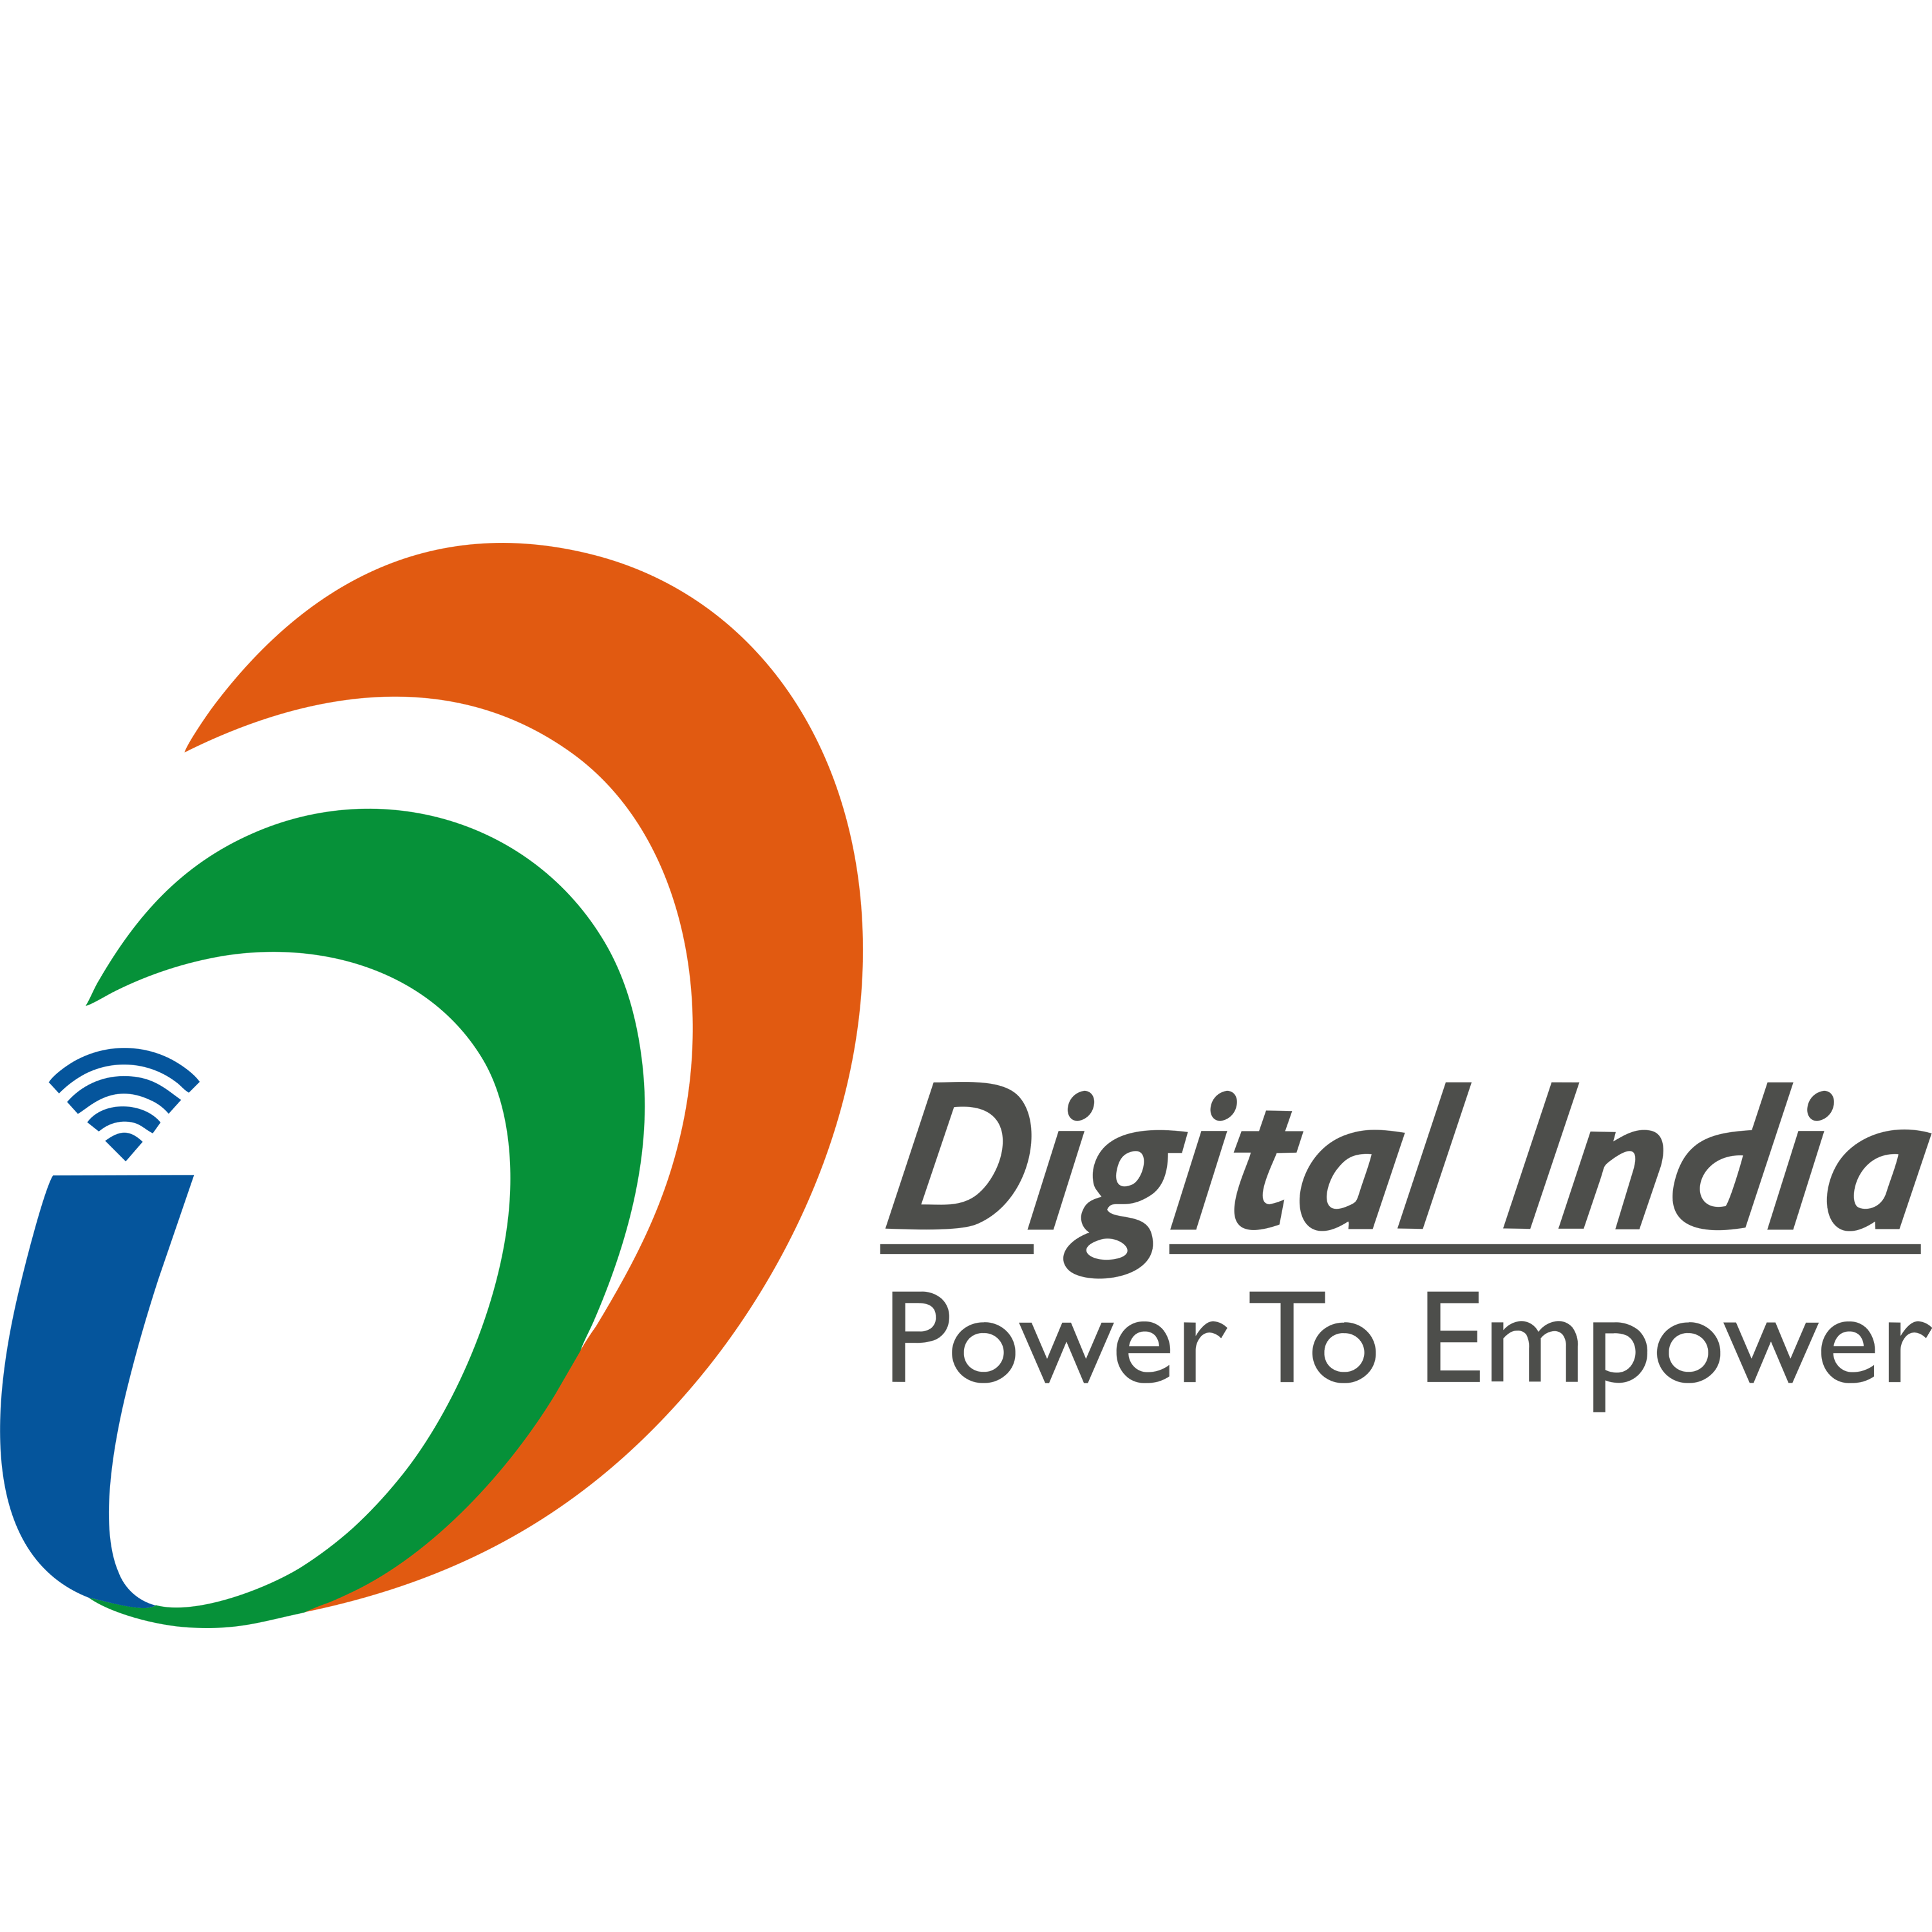 Digital India Logo Transparent Image